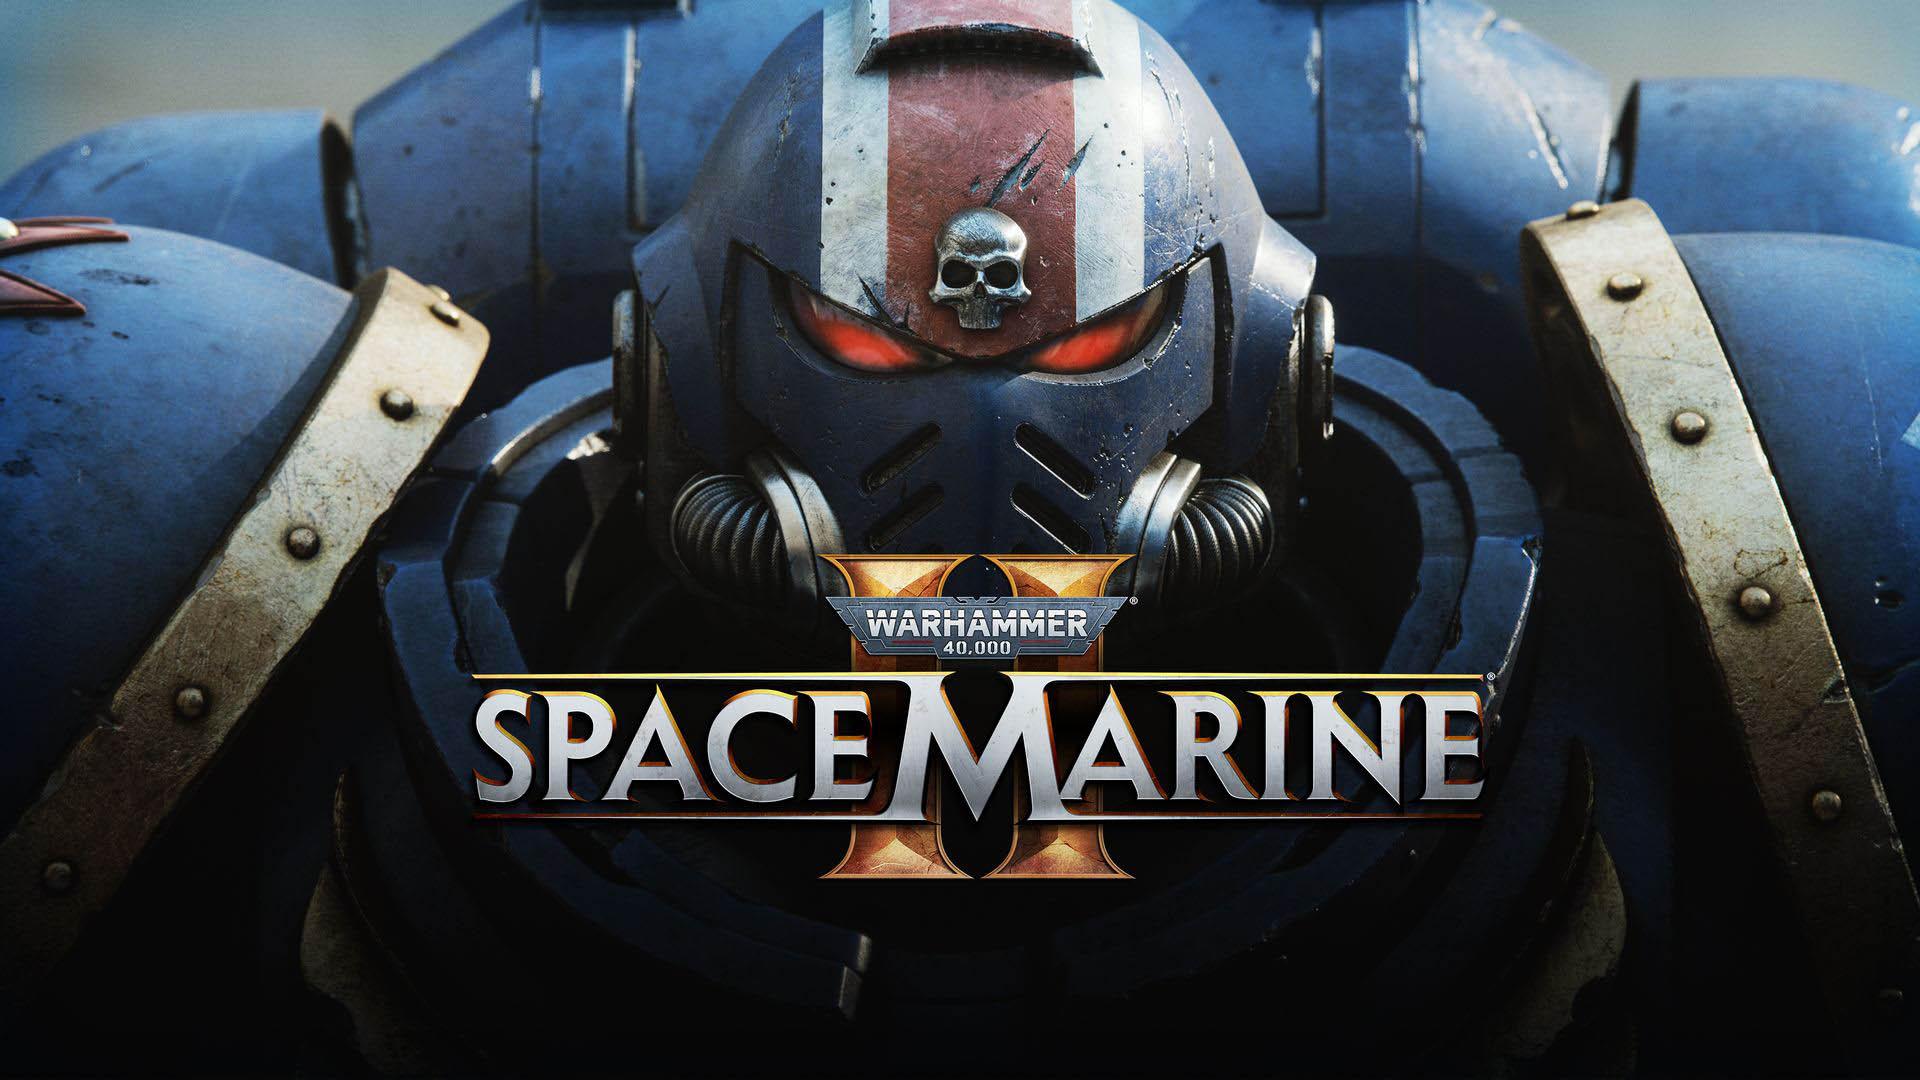 Warhammer 40k: Space Marine 2 احتمالاً دارای یک جزء چند نفره خواهد بود